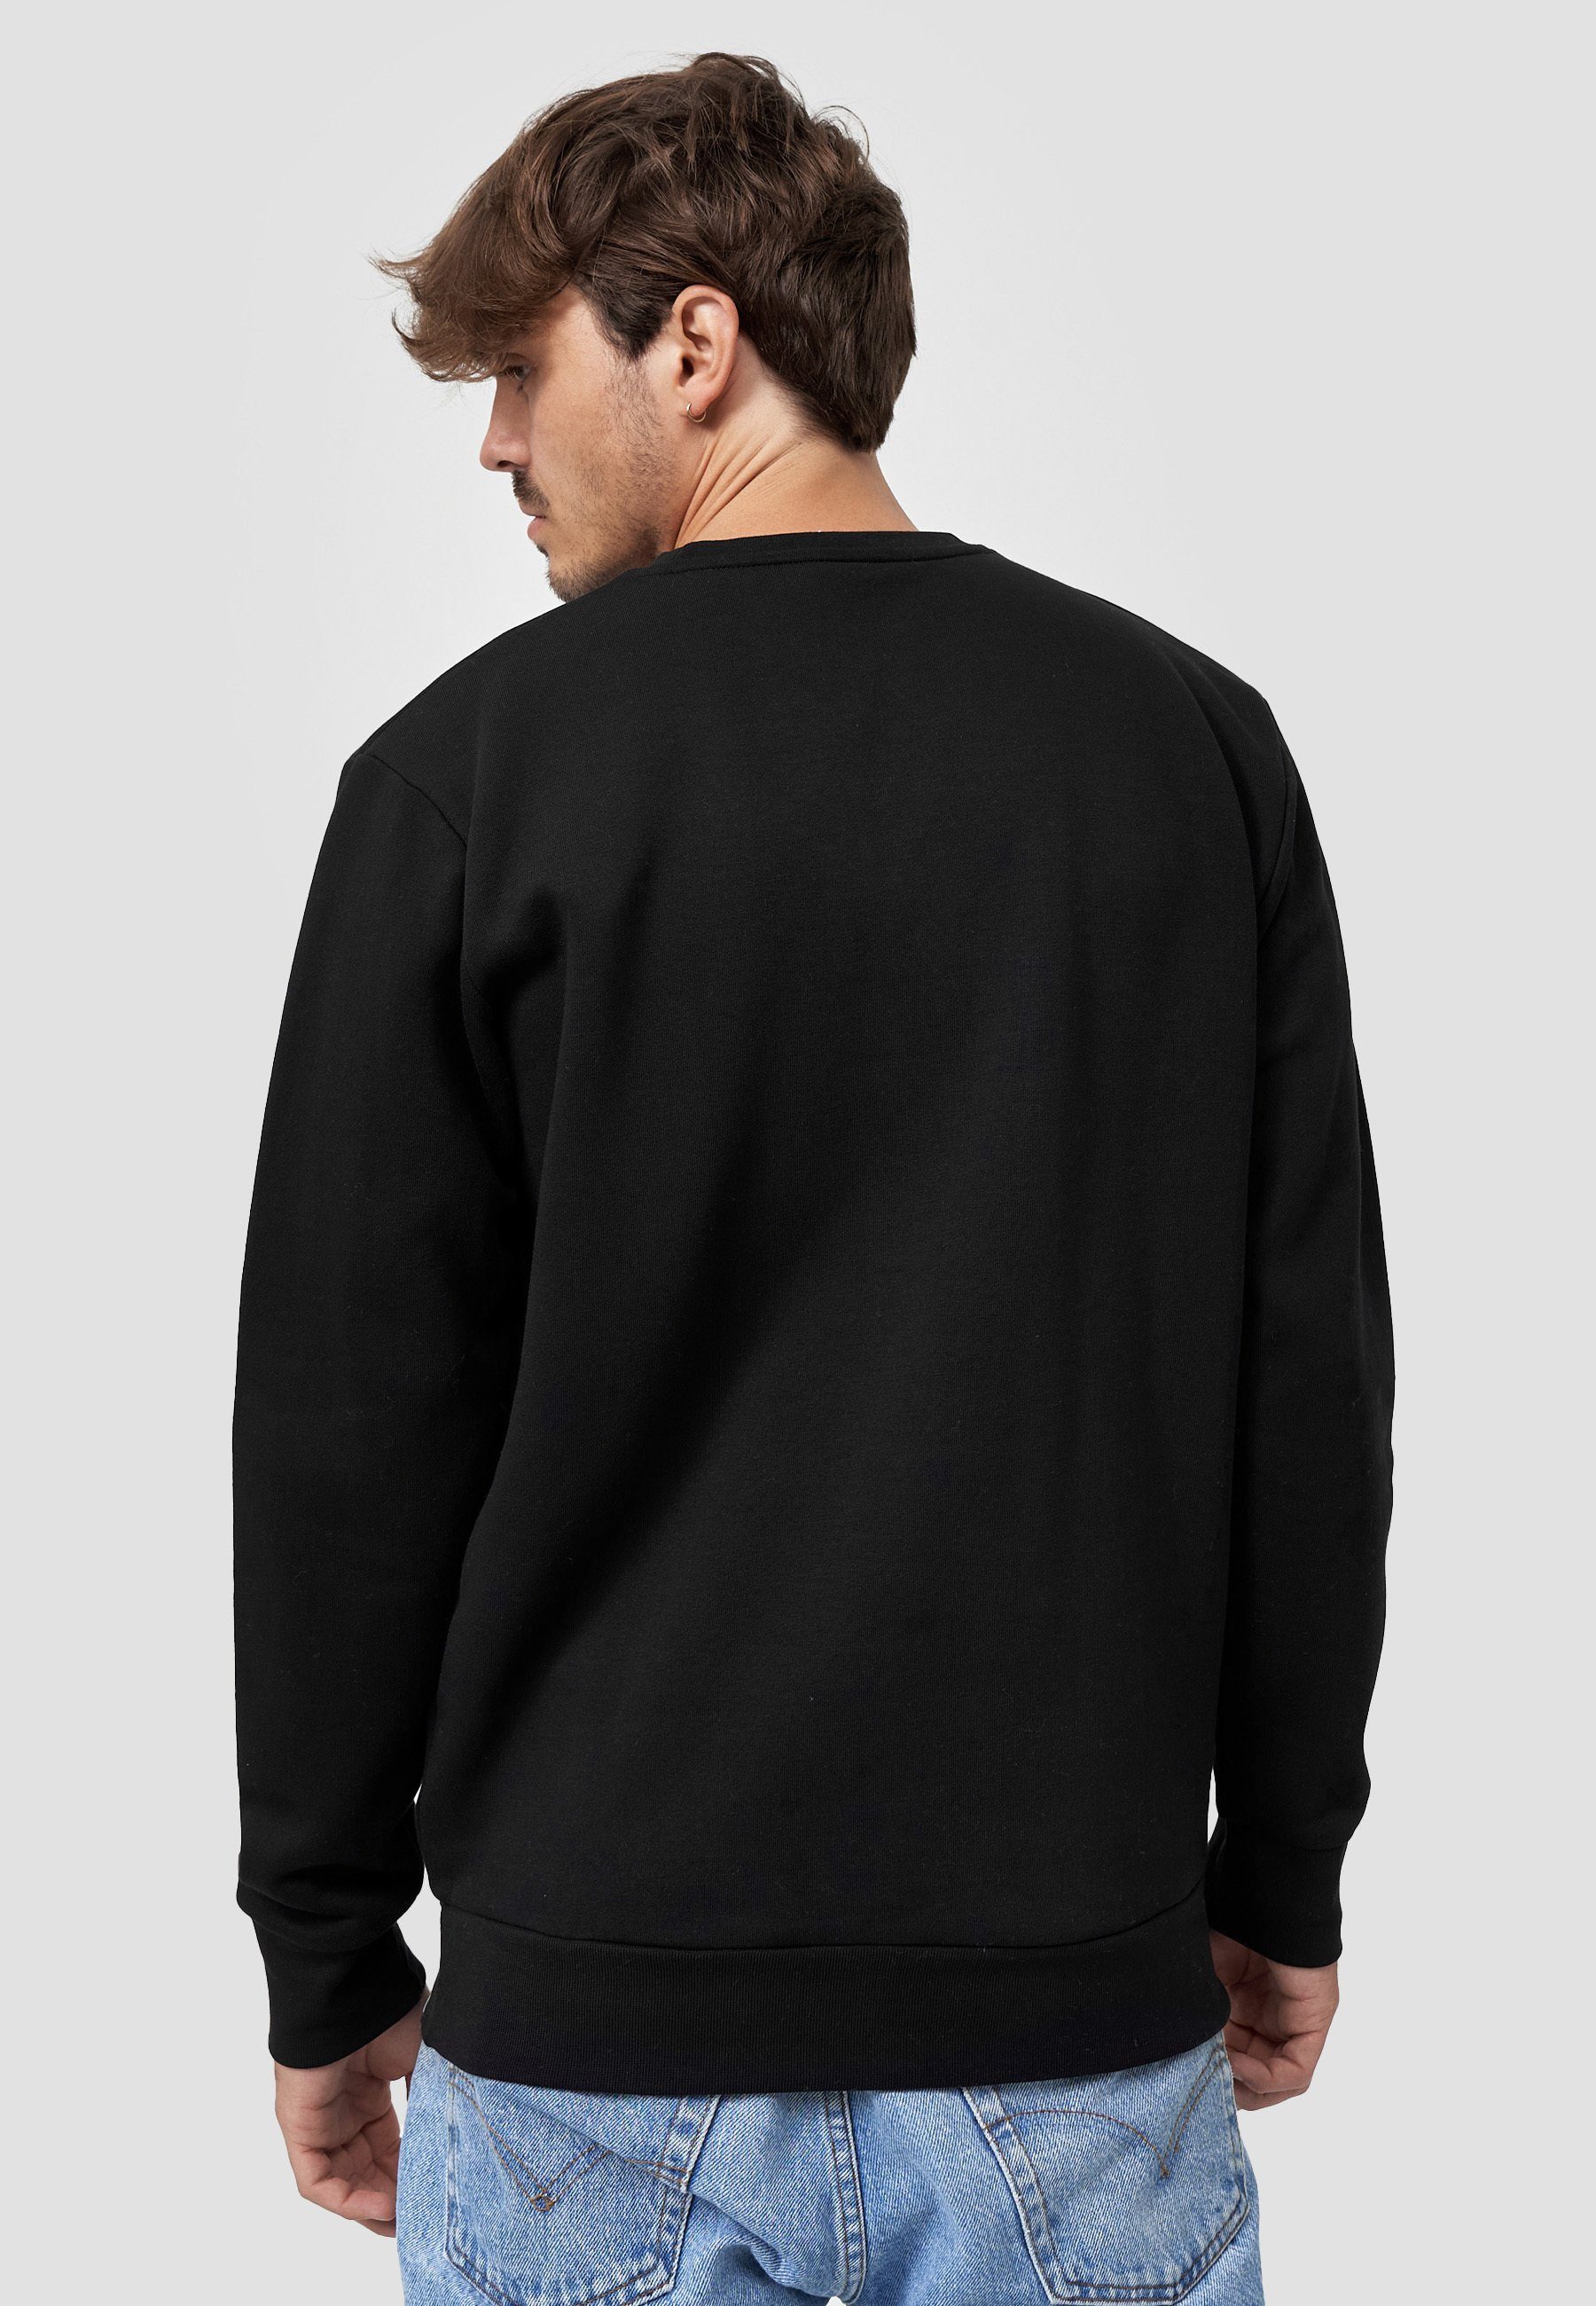 MIKON Bio-Baumwolle Sweatshirt zertifizierte Sense schwarz-black GOTS